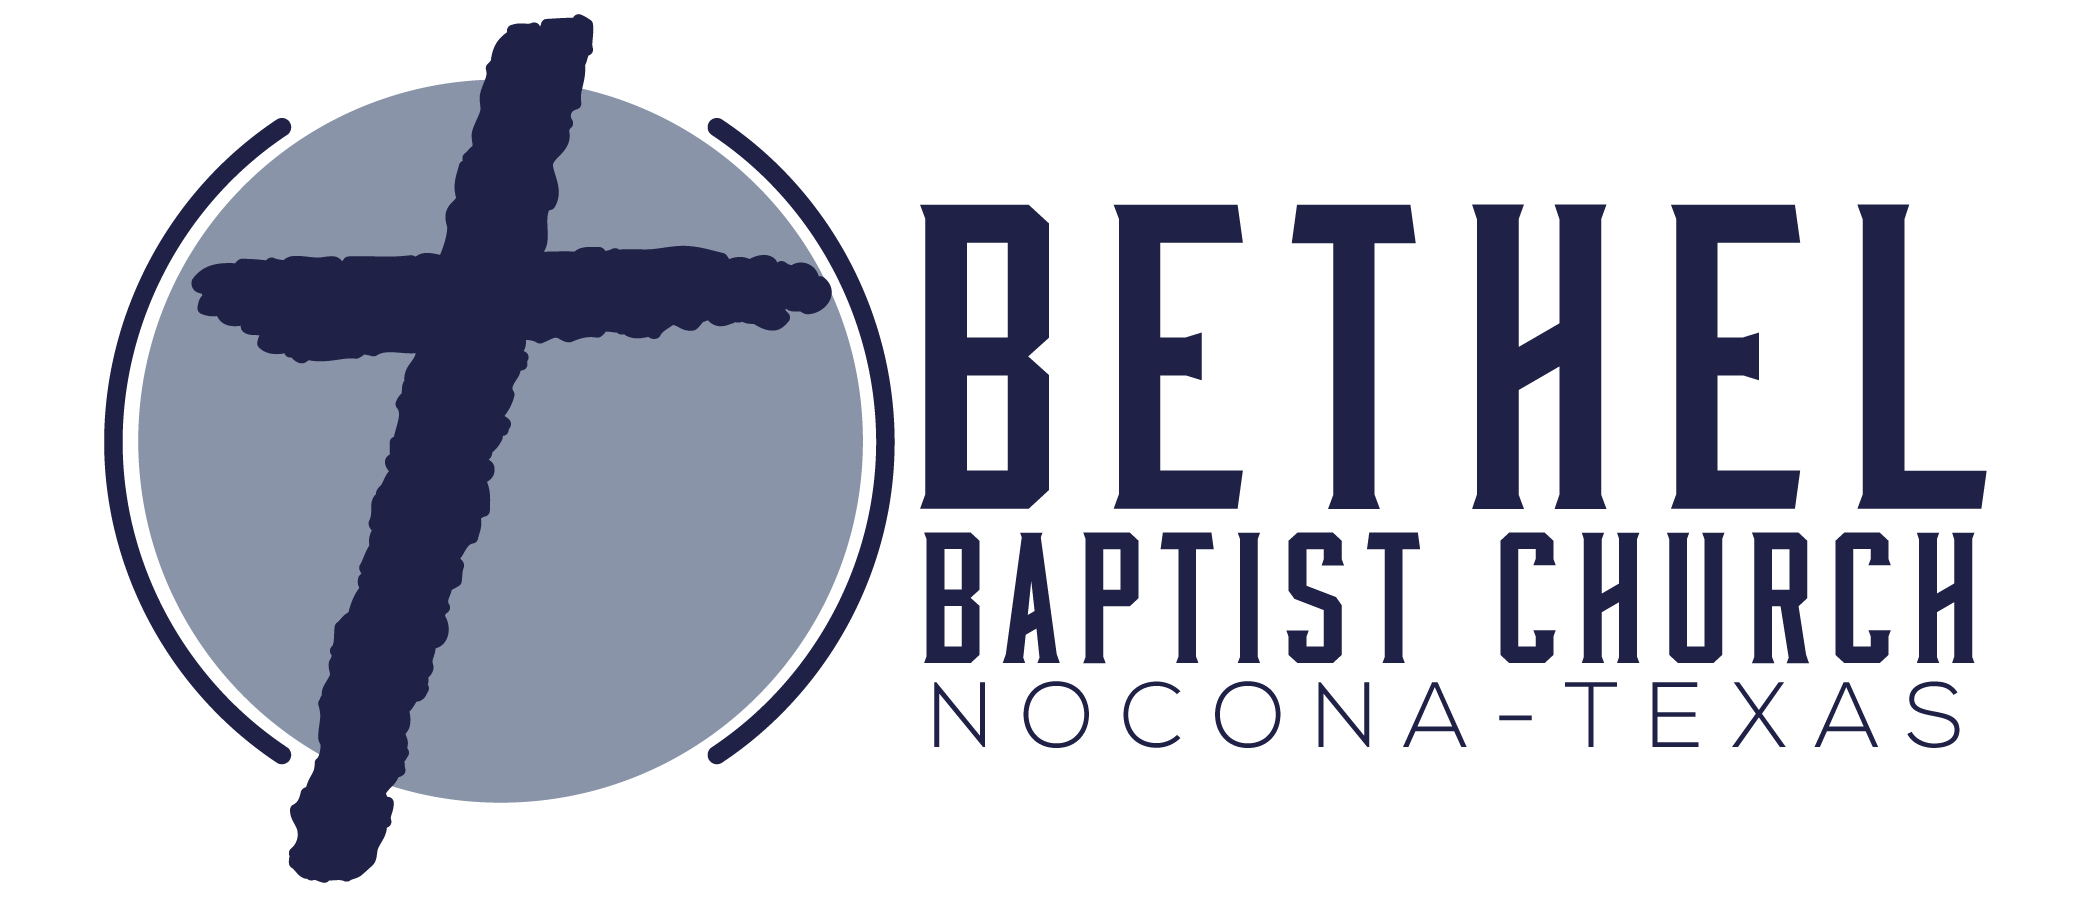 Bethel Baptist Nocona